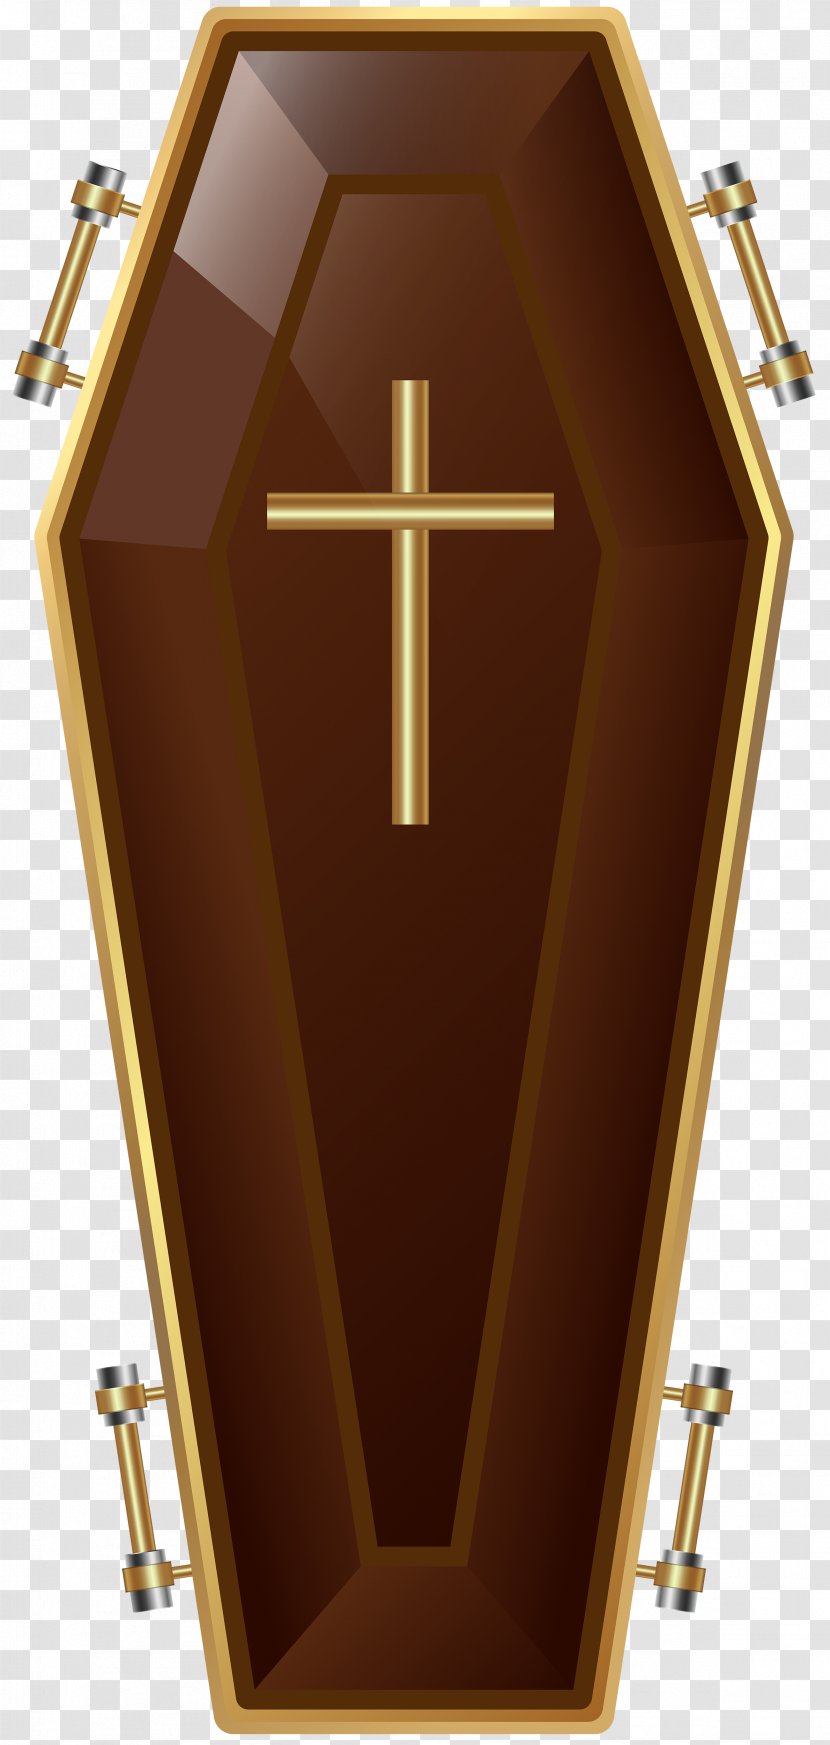 Clip Art Image Illustration - Pulpit - Sarcophagus Insignia Transparent PNG